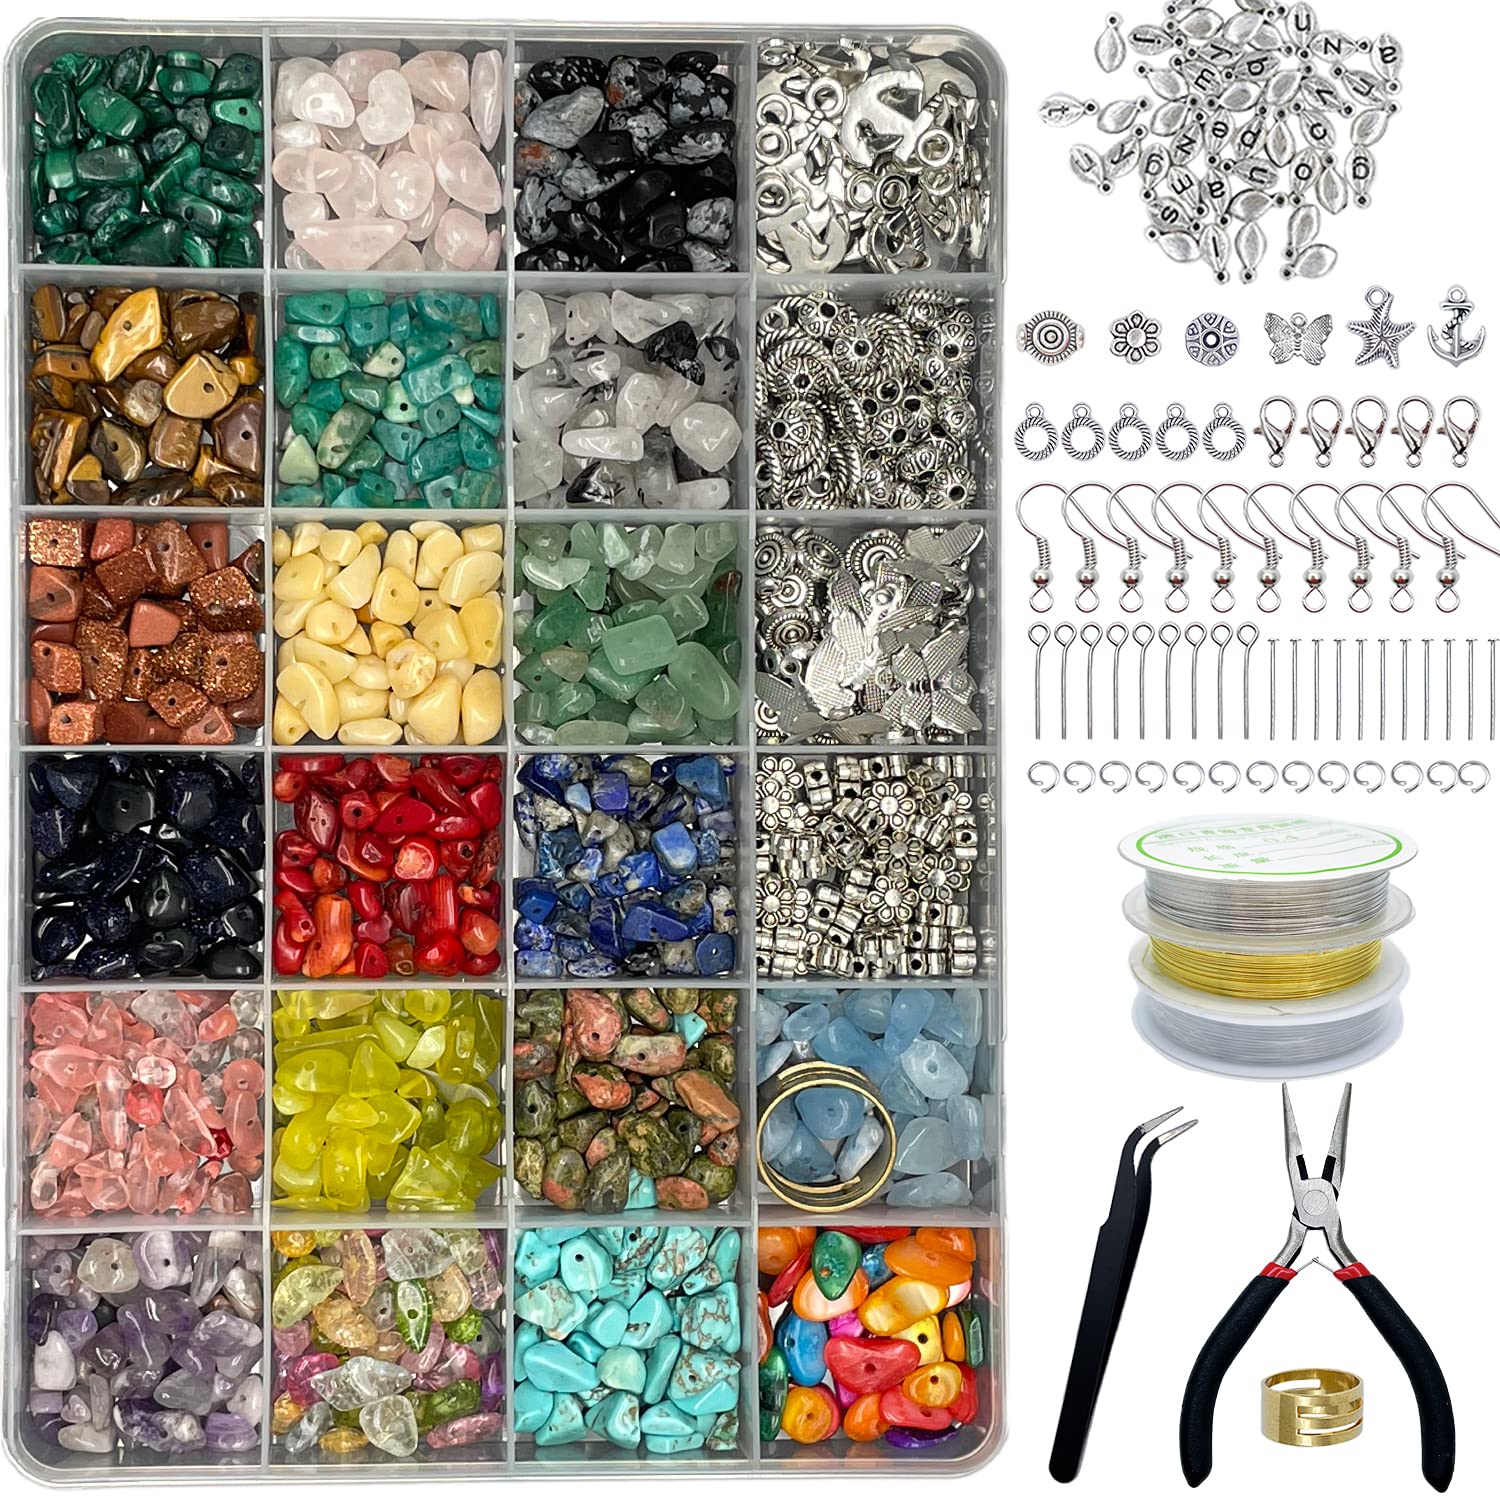 Xmada Jewelry Making Kit - 1587 PCS Beads for Jewelry Making Jewelry Making  Supplies with Crystal Beads